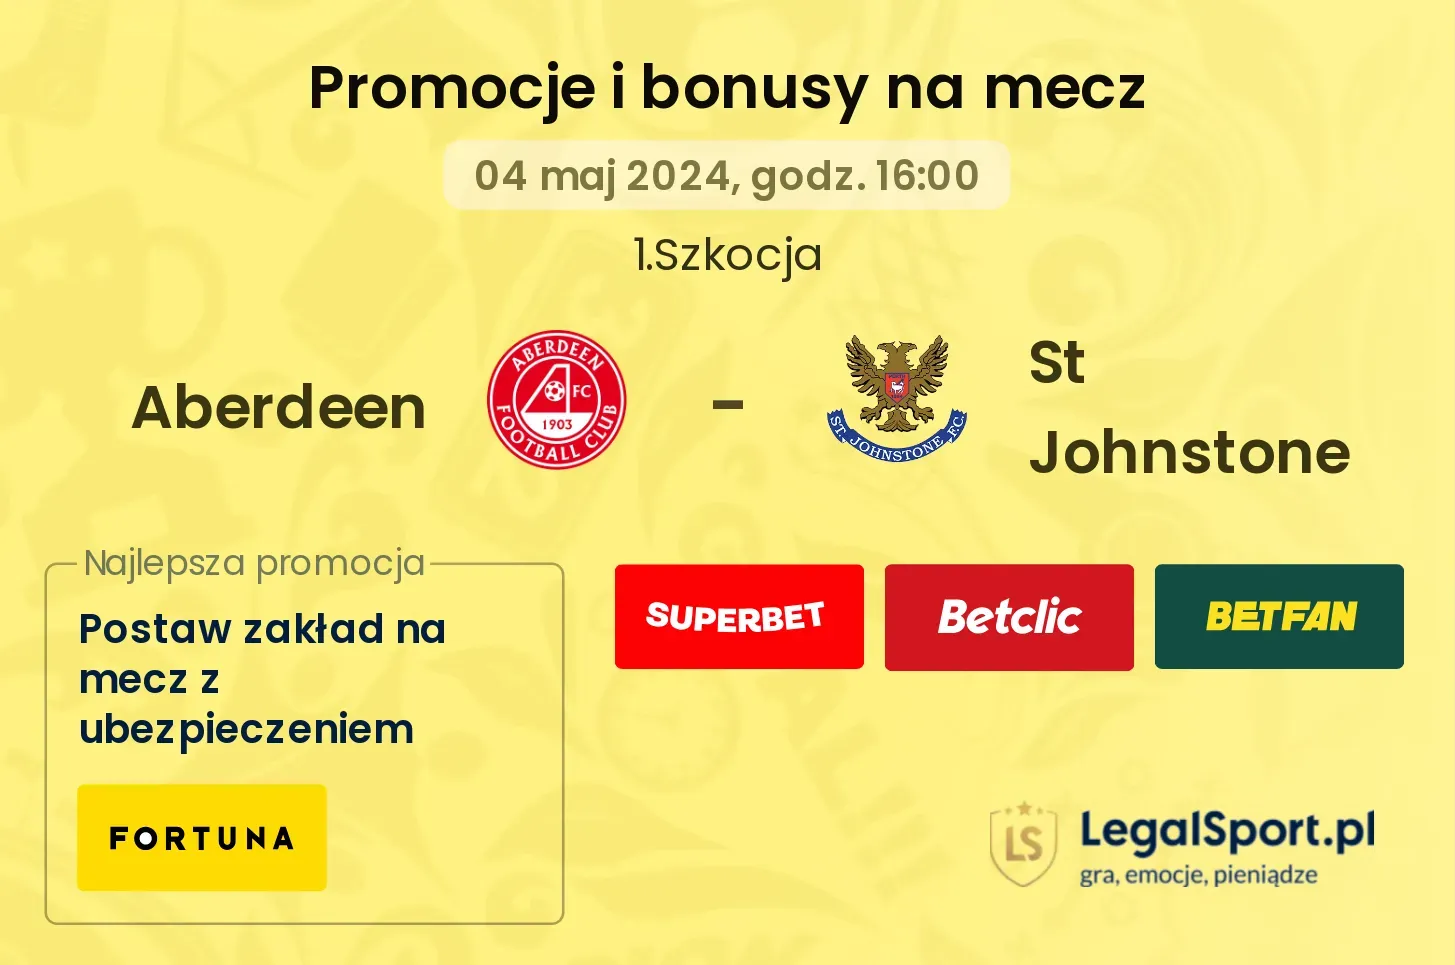 Aberdeen - St Johnstone promocje bonusy na mecz